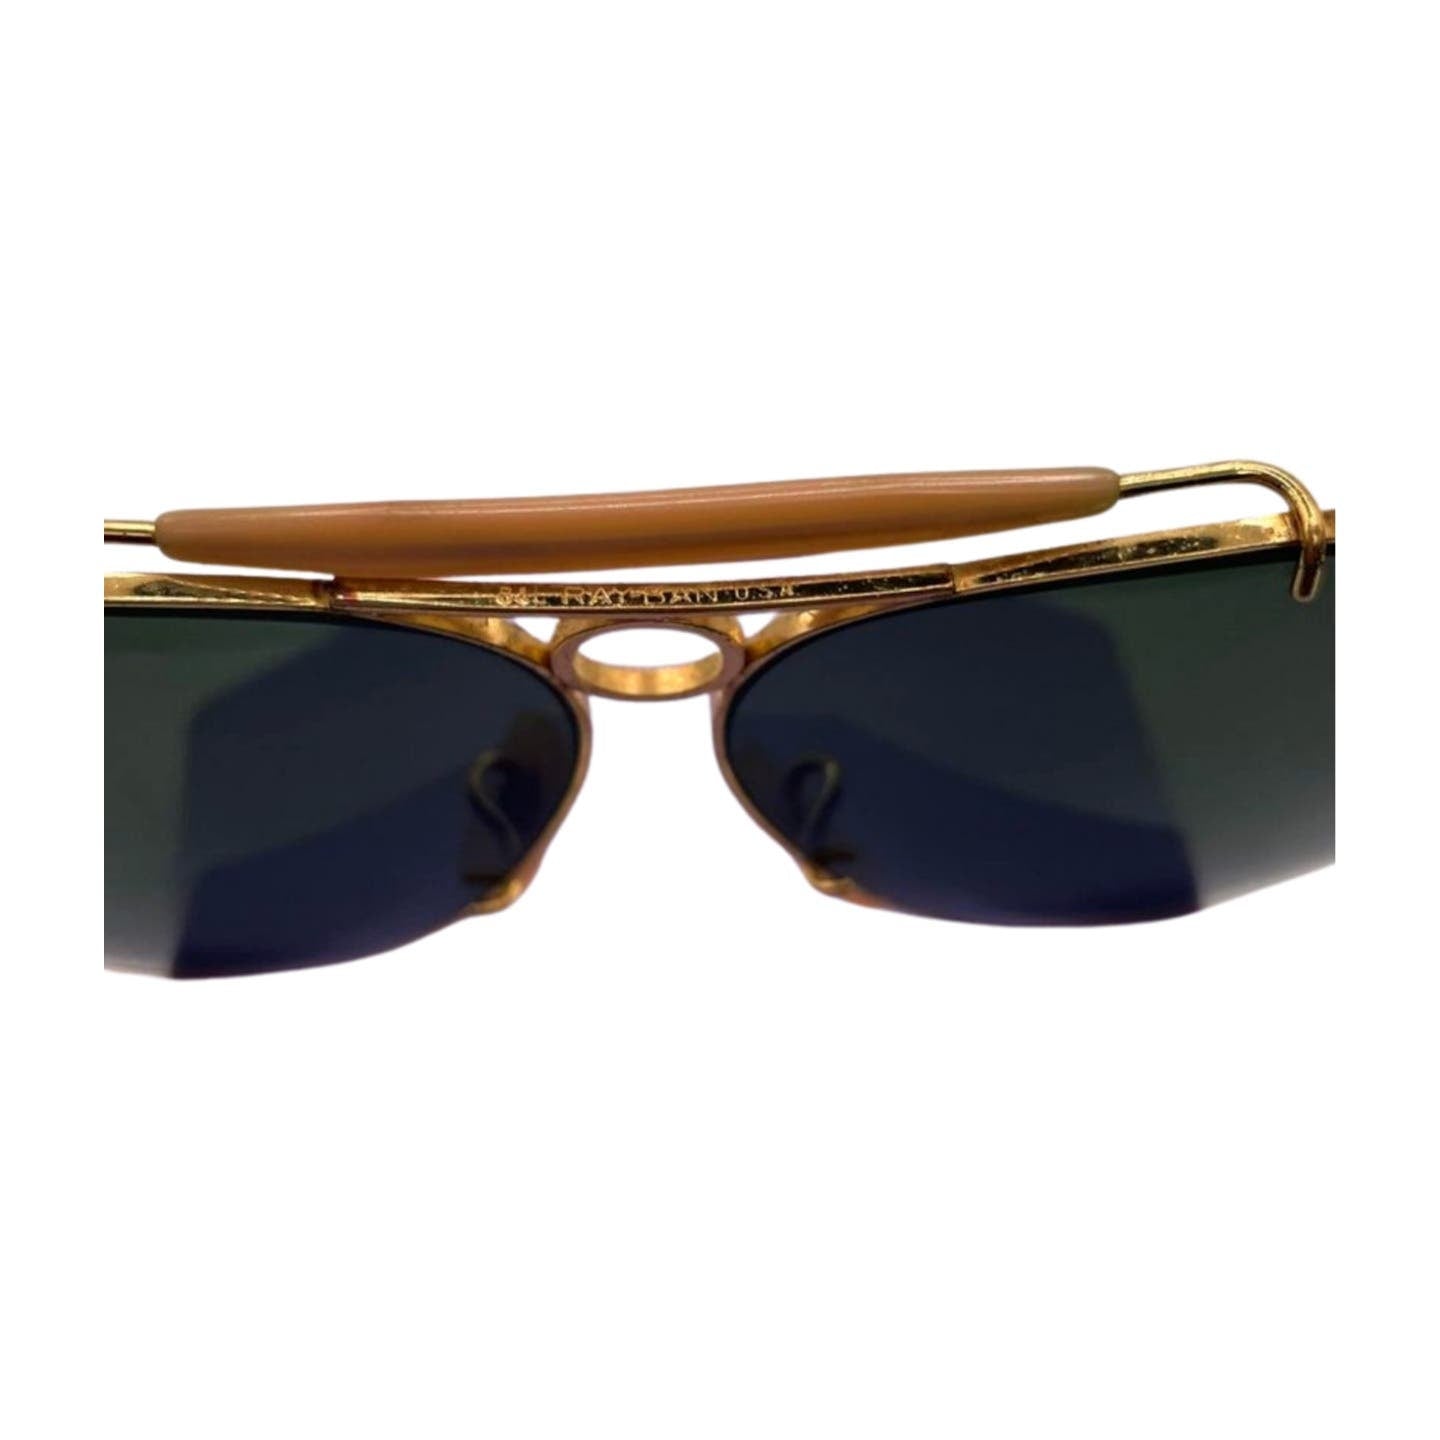 Vintage Ray Ban Shooter Aviator Sunglasses - Le Look